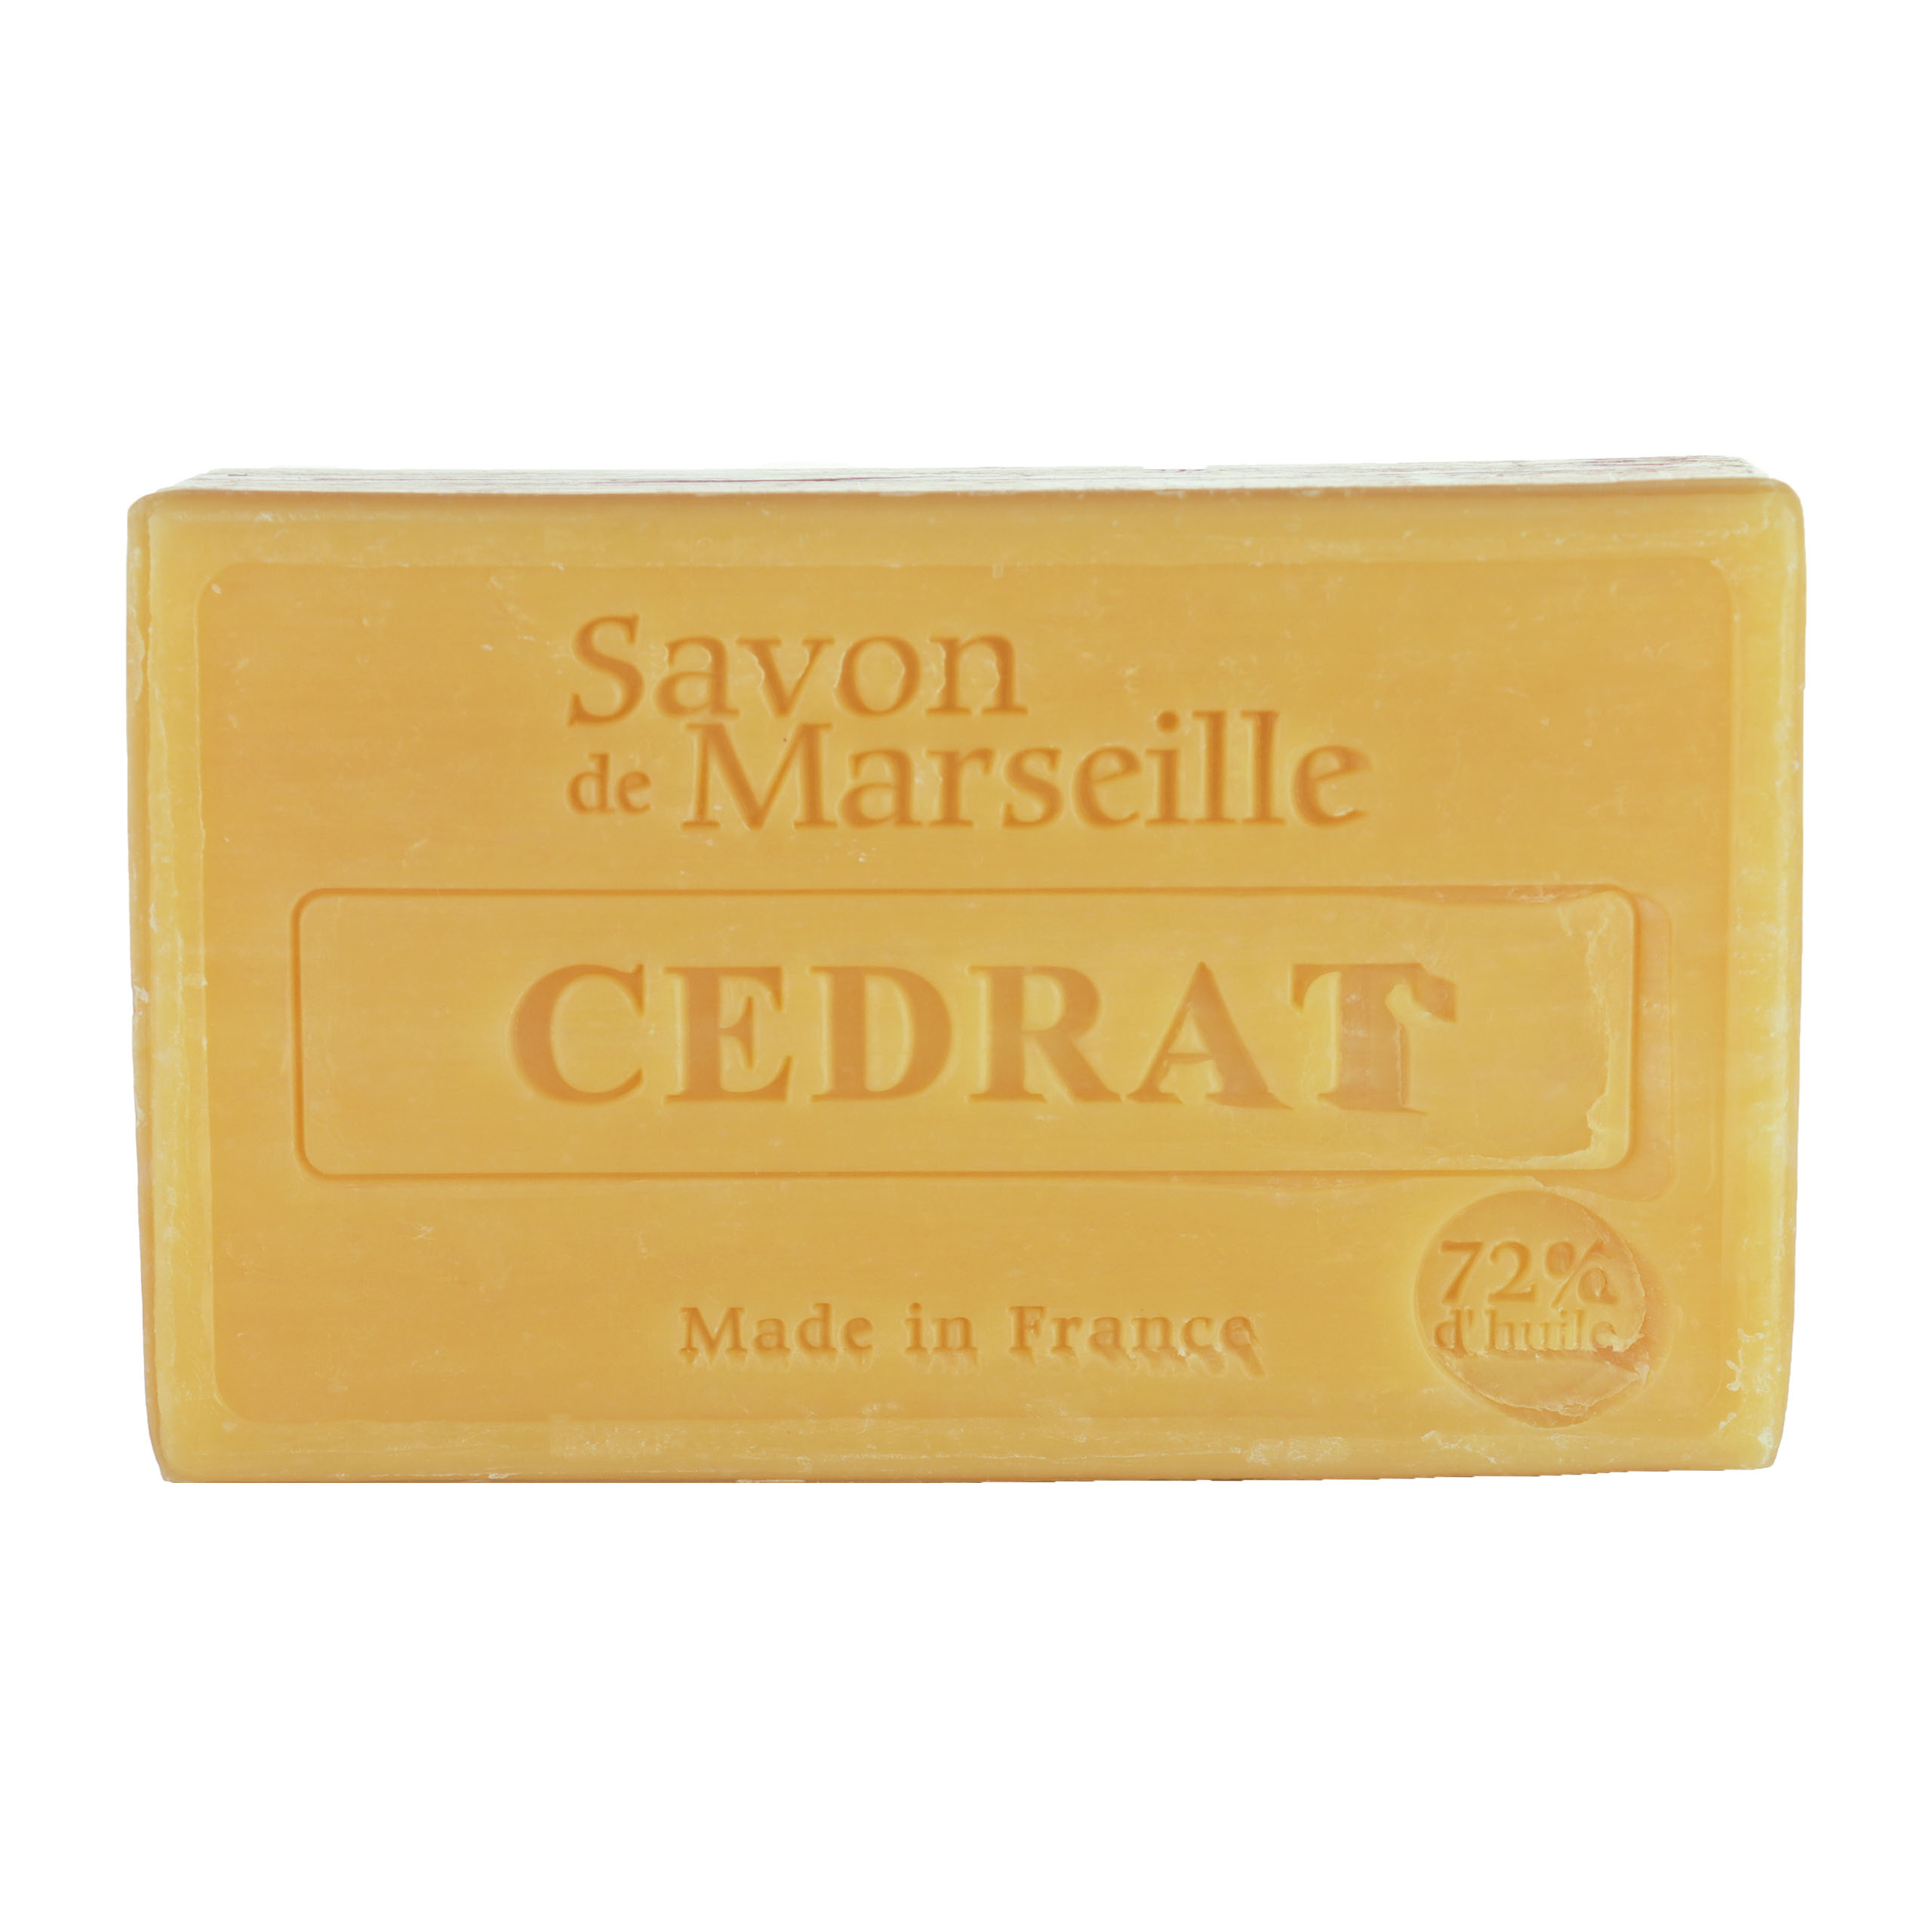 Mydło marsylskie Cedrat Cytron 100g Le Chatelard 1802